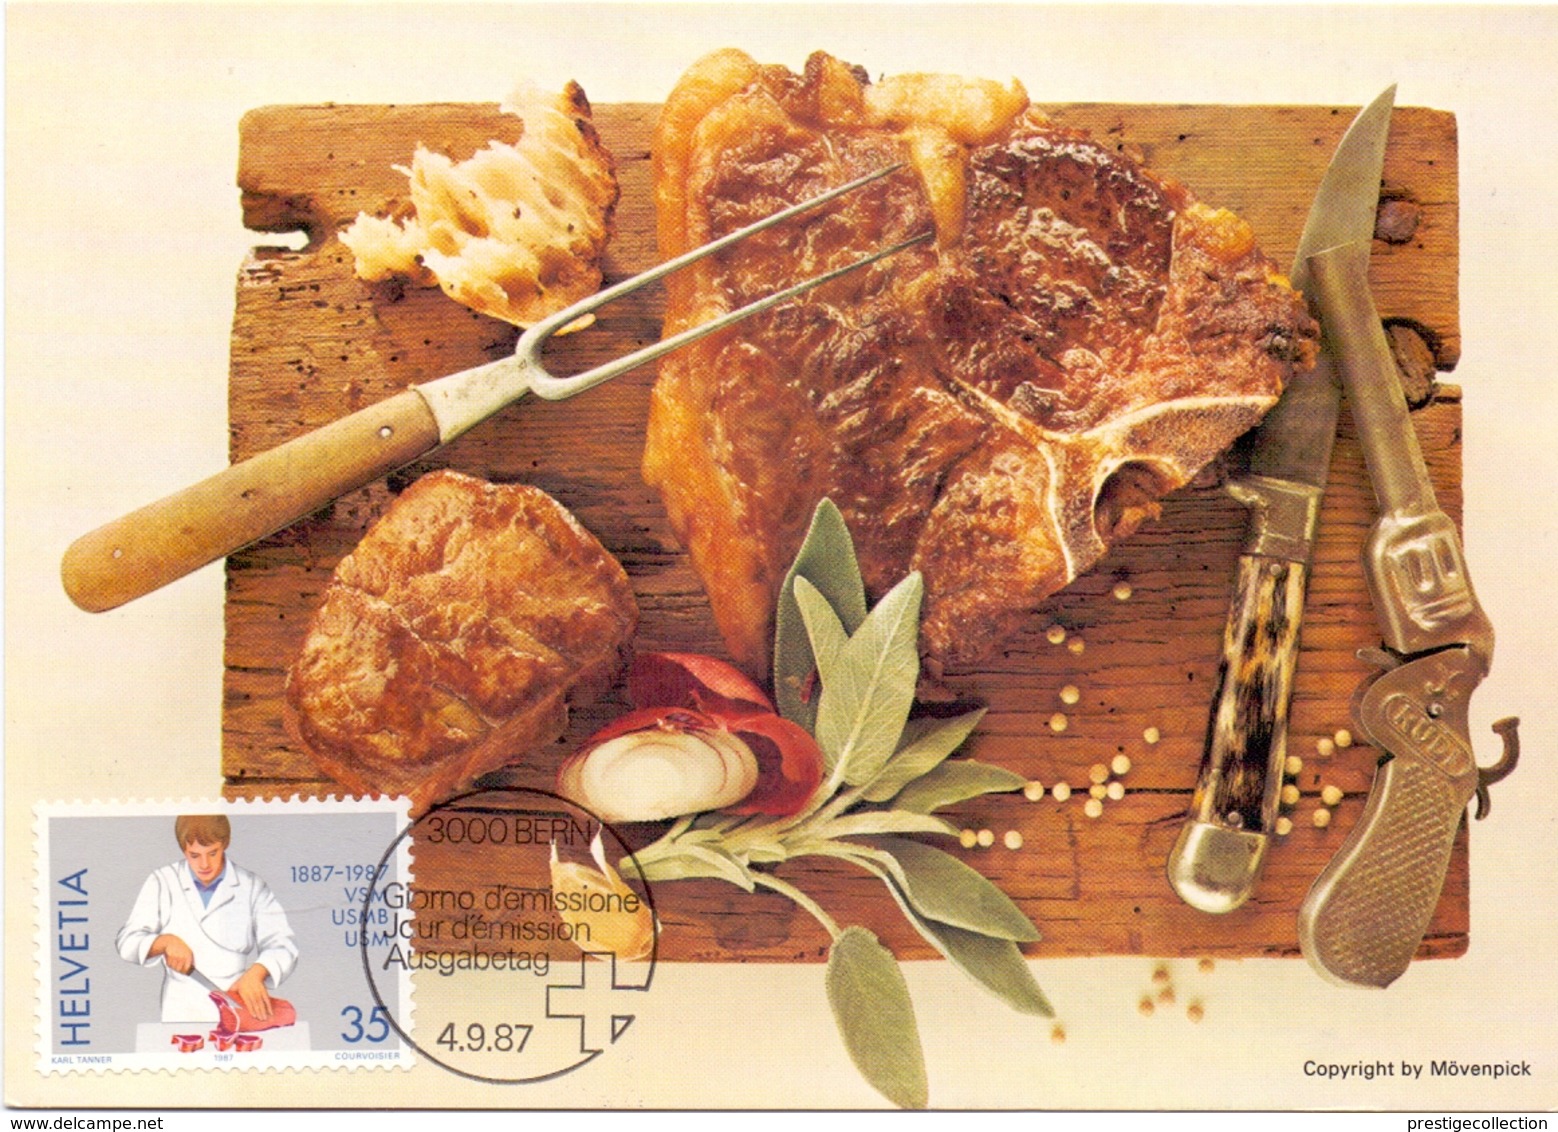 HELVETIA  SWISS BERN MOVENPICK GOOD AND FRIENDLY  MAXIMUM POST CARD  (GENN201553) - Alimentazione